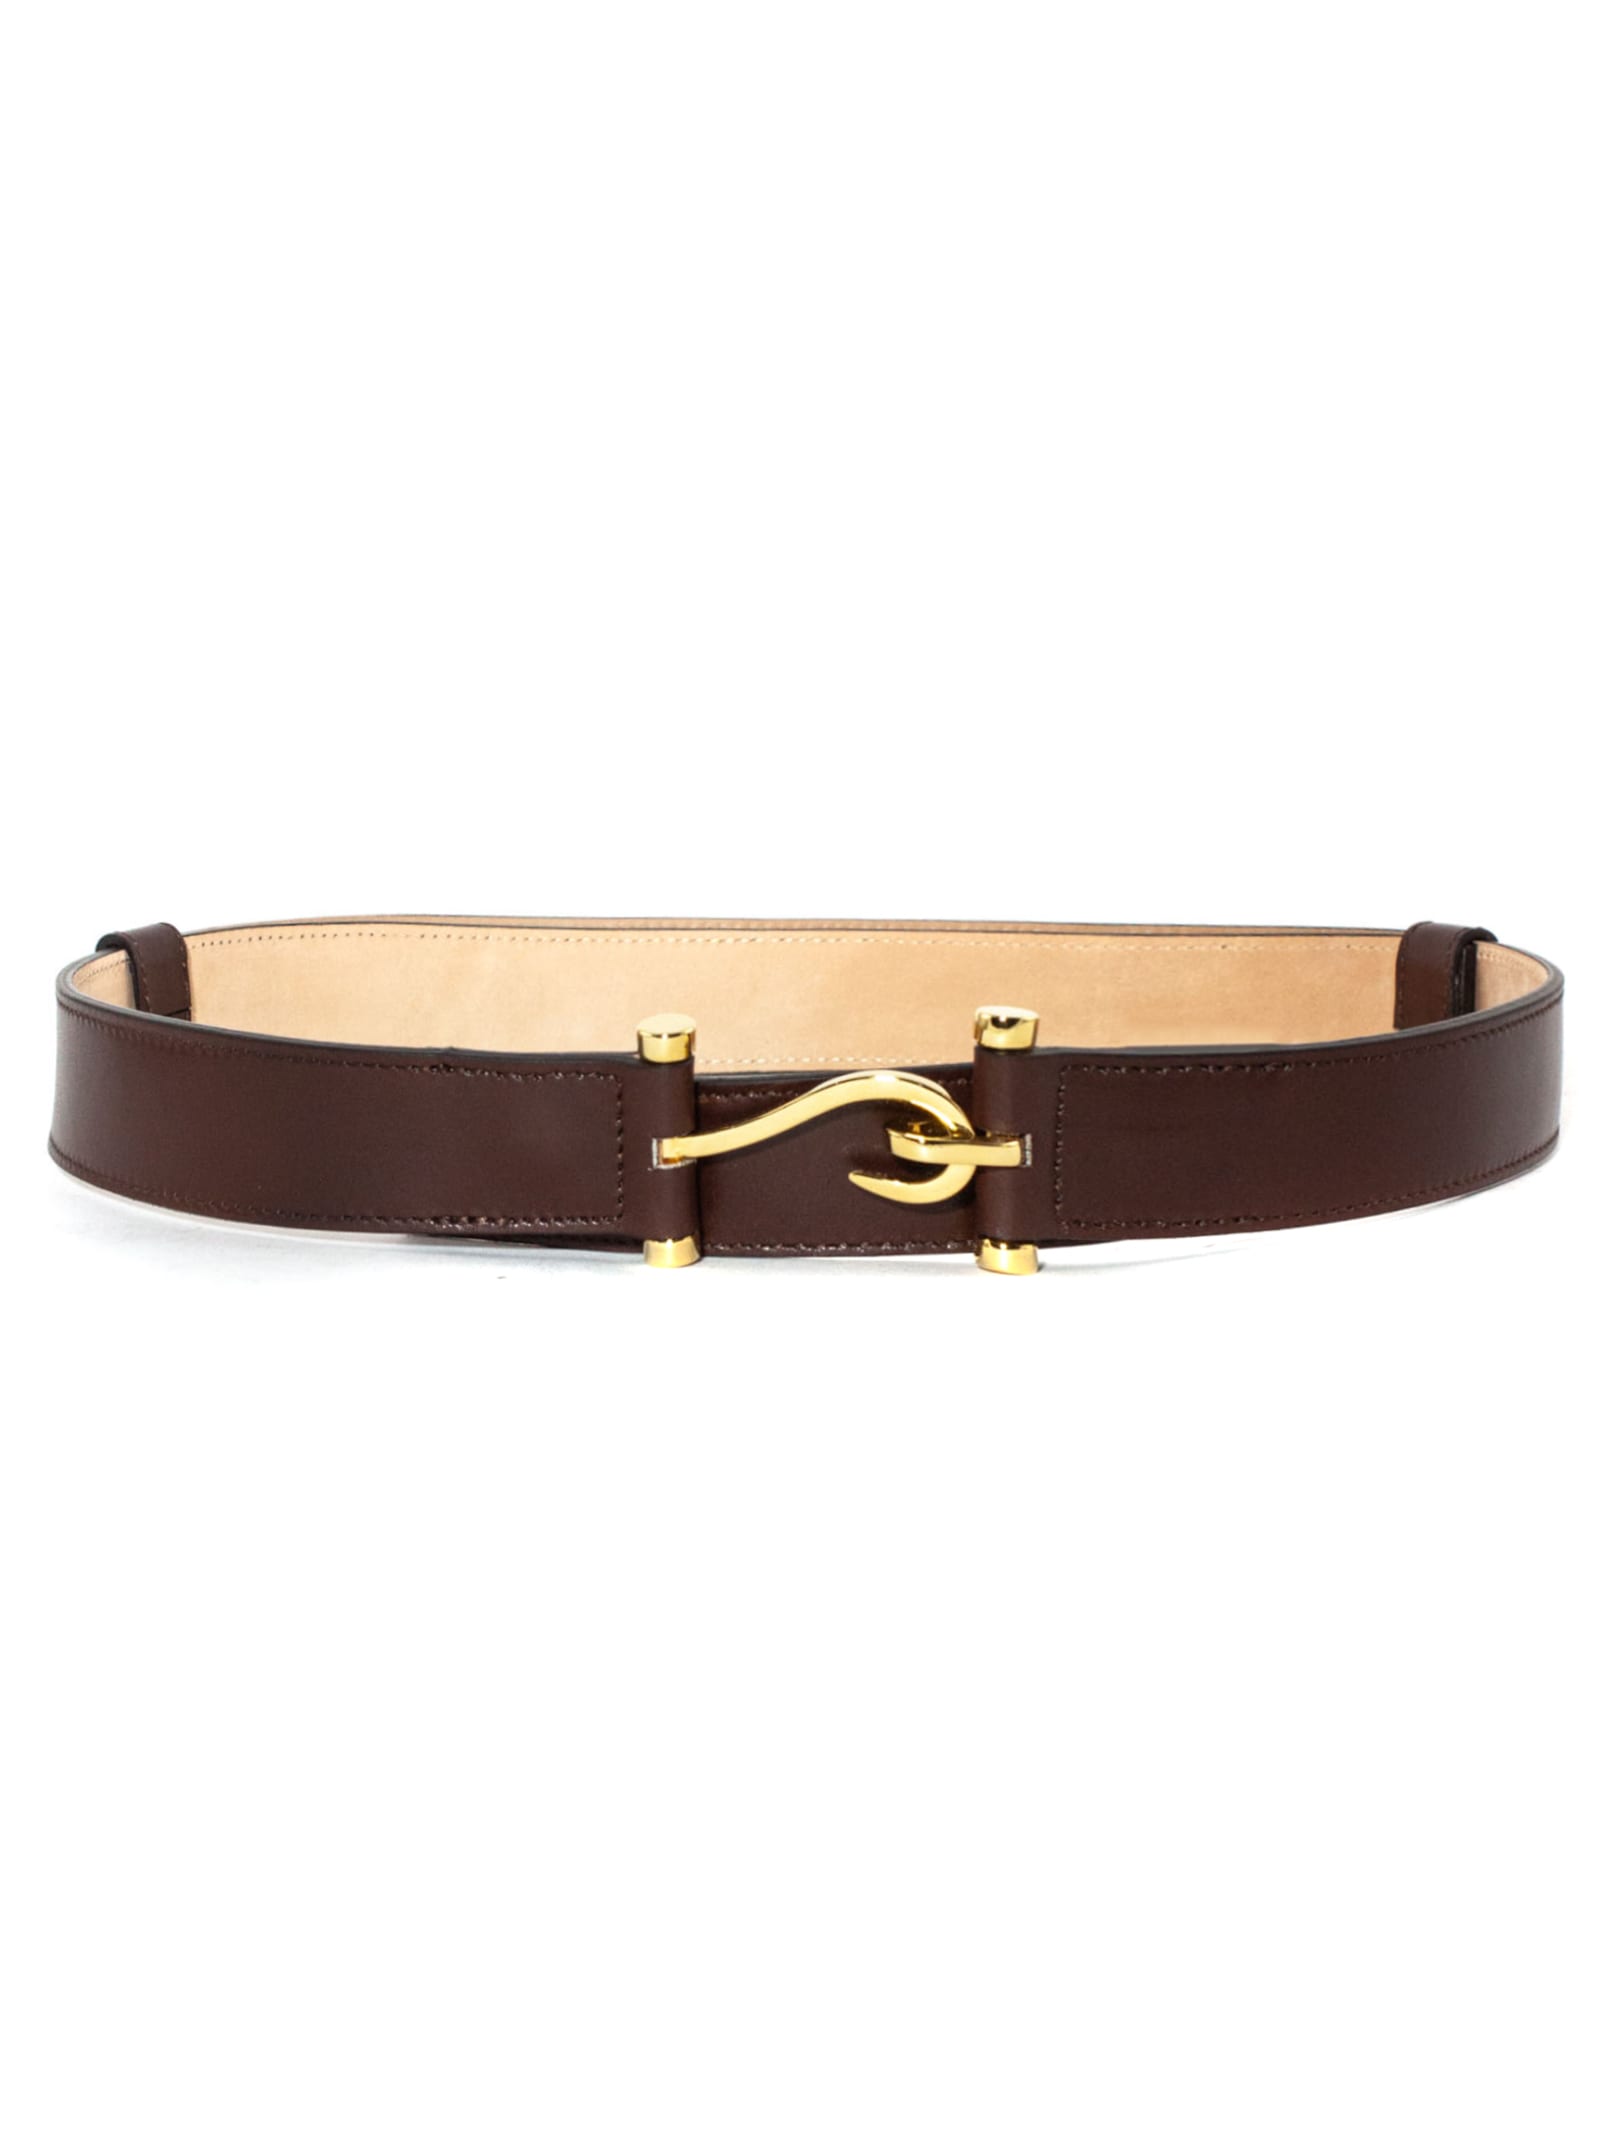 Edhen Milano Brown Leather Comporta Belt